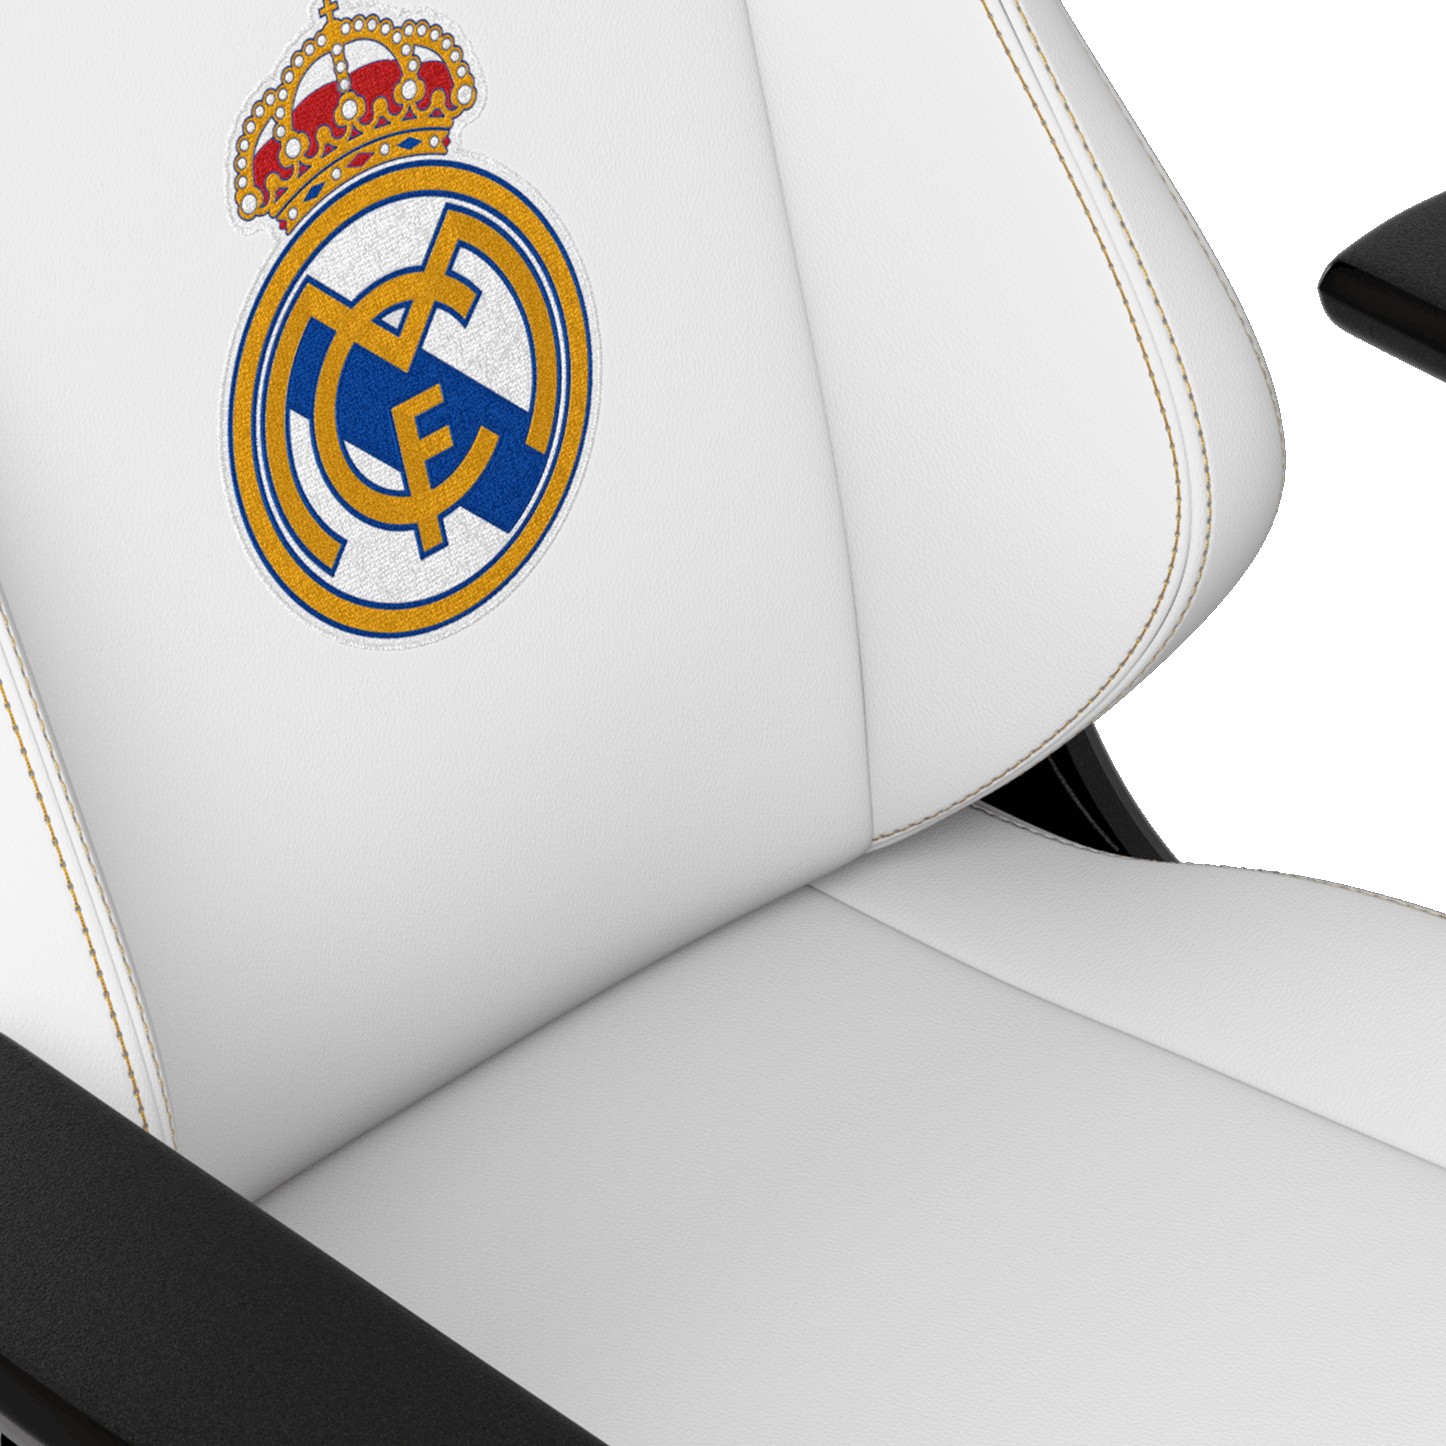 Gamer szék noblechairs HERO Real Madrid Edition PU Bőr